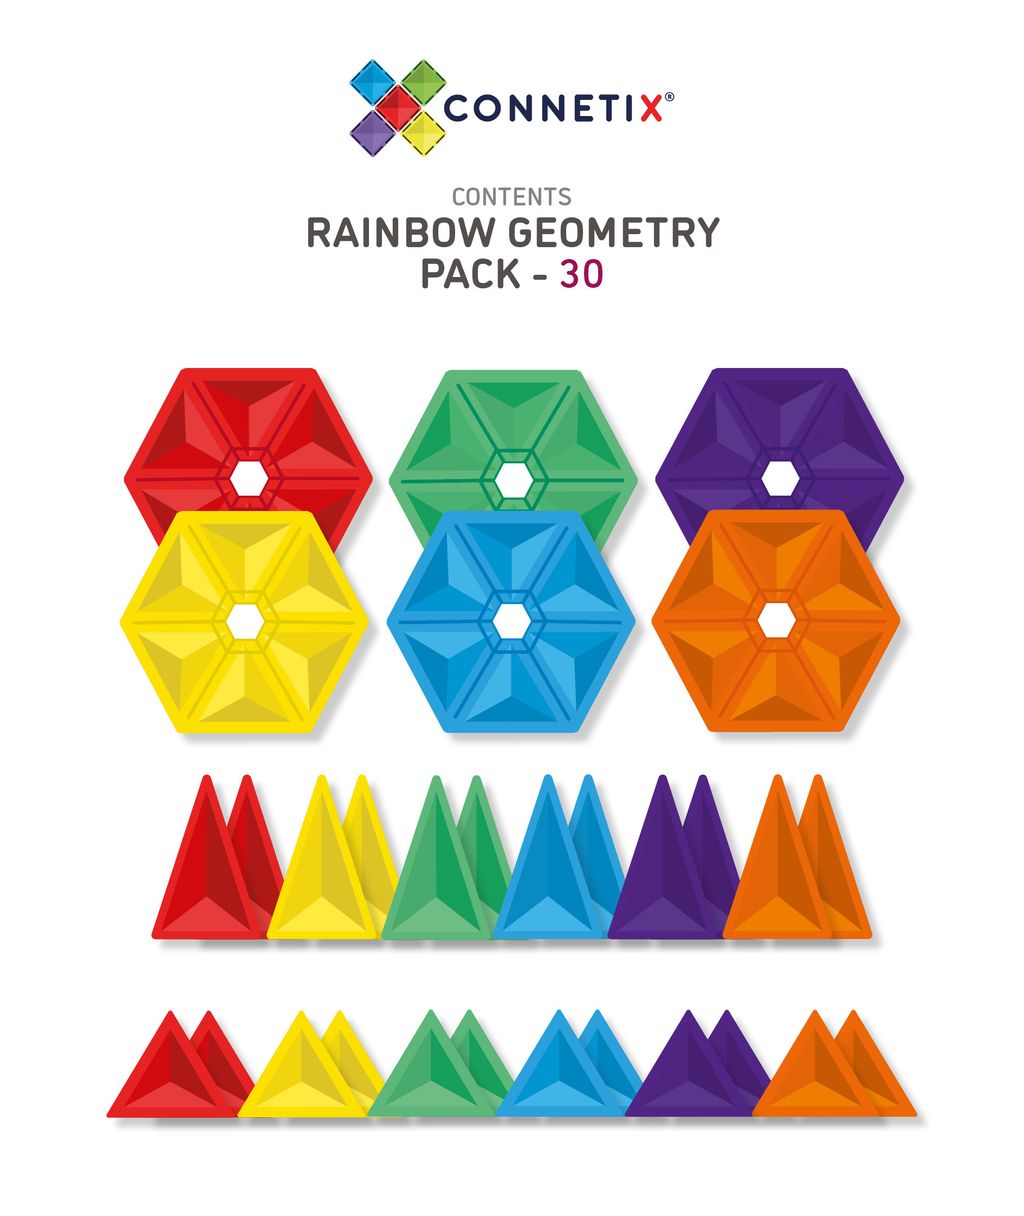 30 Rainbow Geometry Pack Contents.jpg